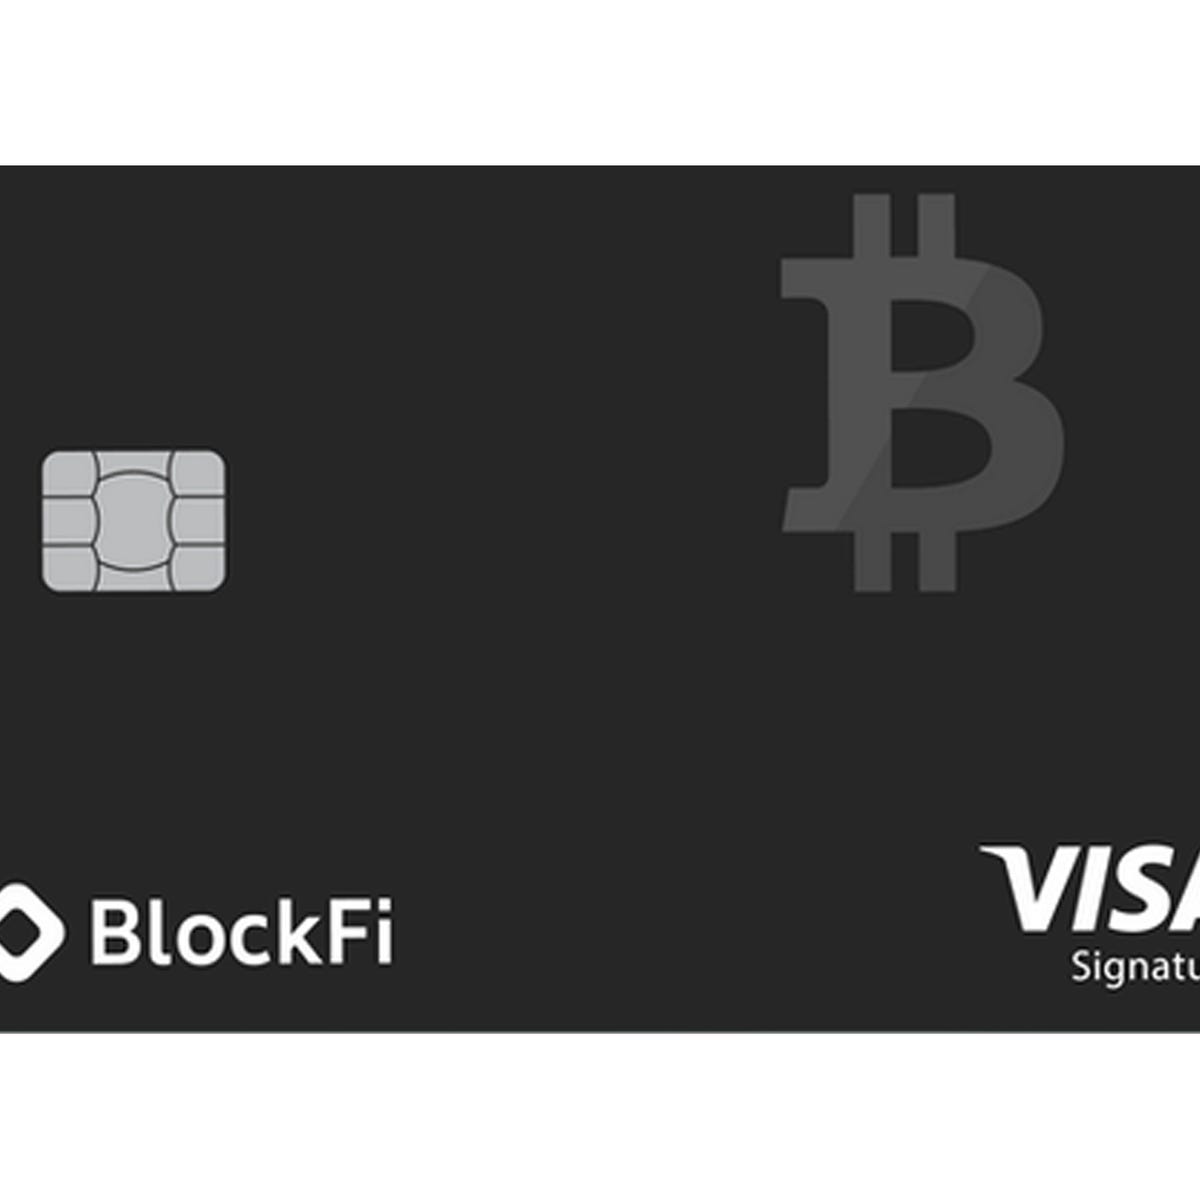 Credit card with crypto bitcoin block tracker